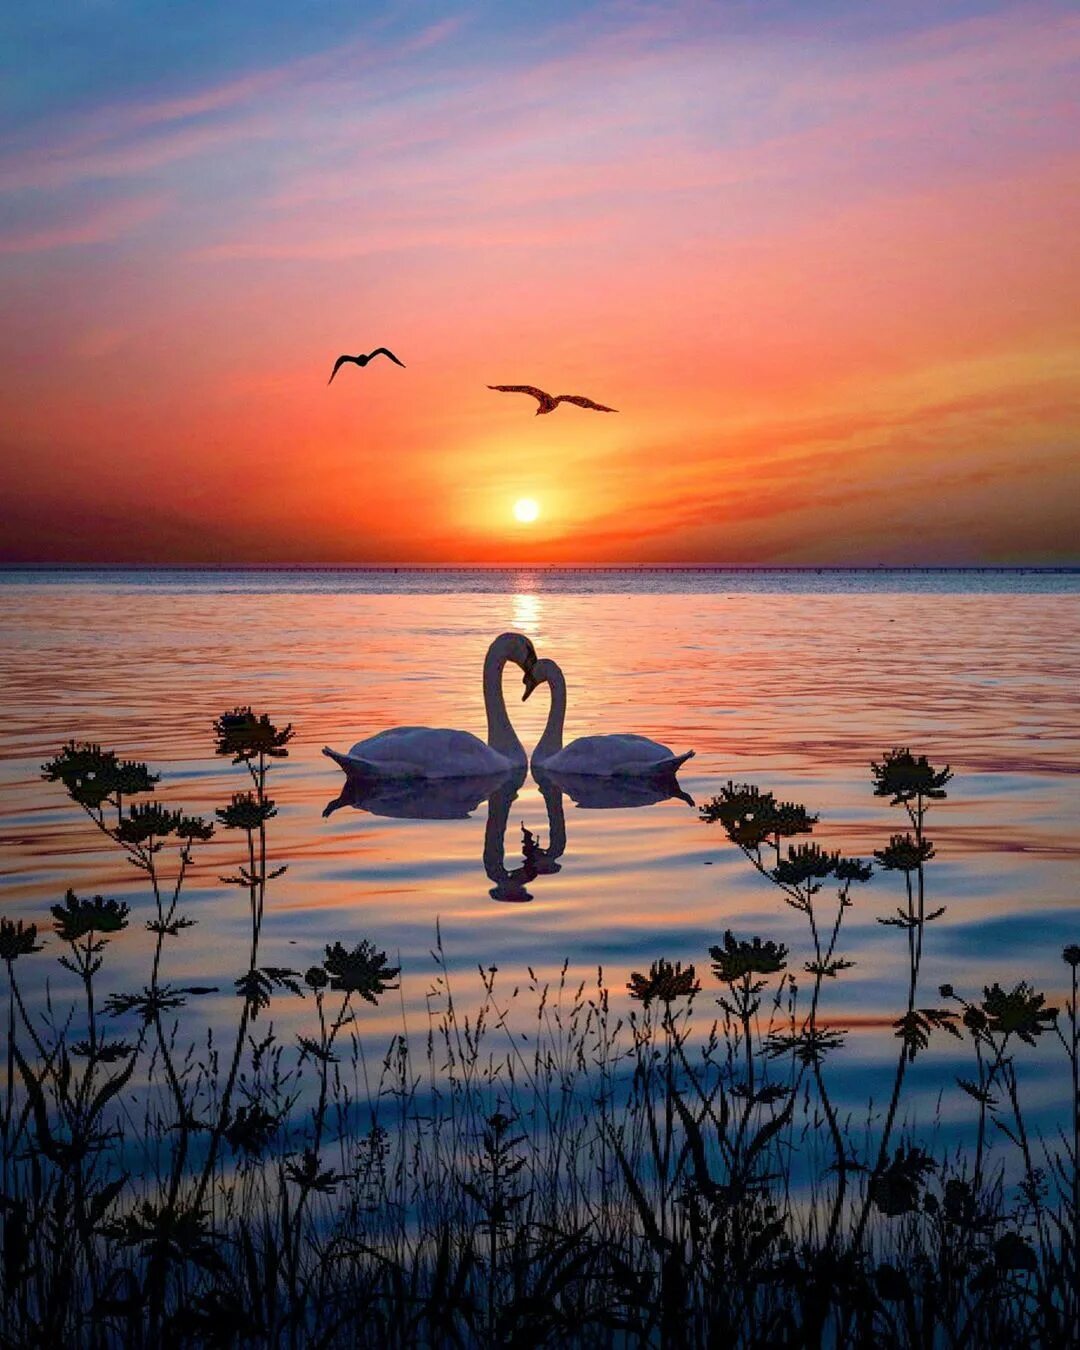 It is a beautiful evening. Лебеди на закате. Два лебедя на закате. Лебеди на закате солнца. Красивый закат лебеди.